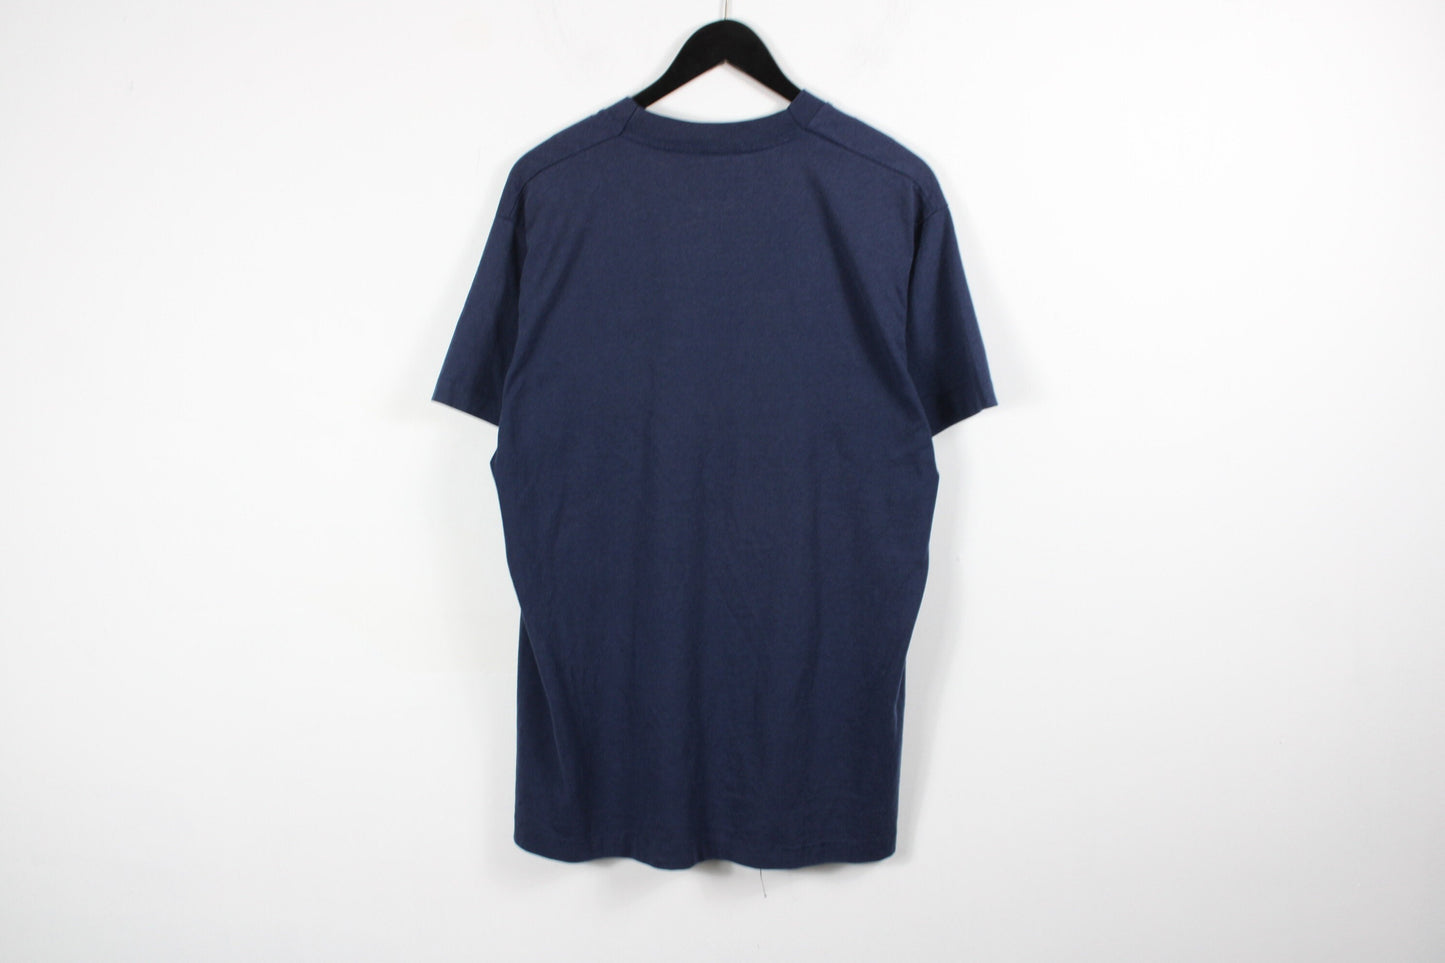 Cambridge-England University T-Shirt / Vintage Collegiate Campus Graphic Tee Shirt / 90s / 2000s Sports-Team Clothing